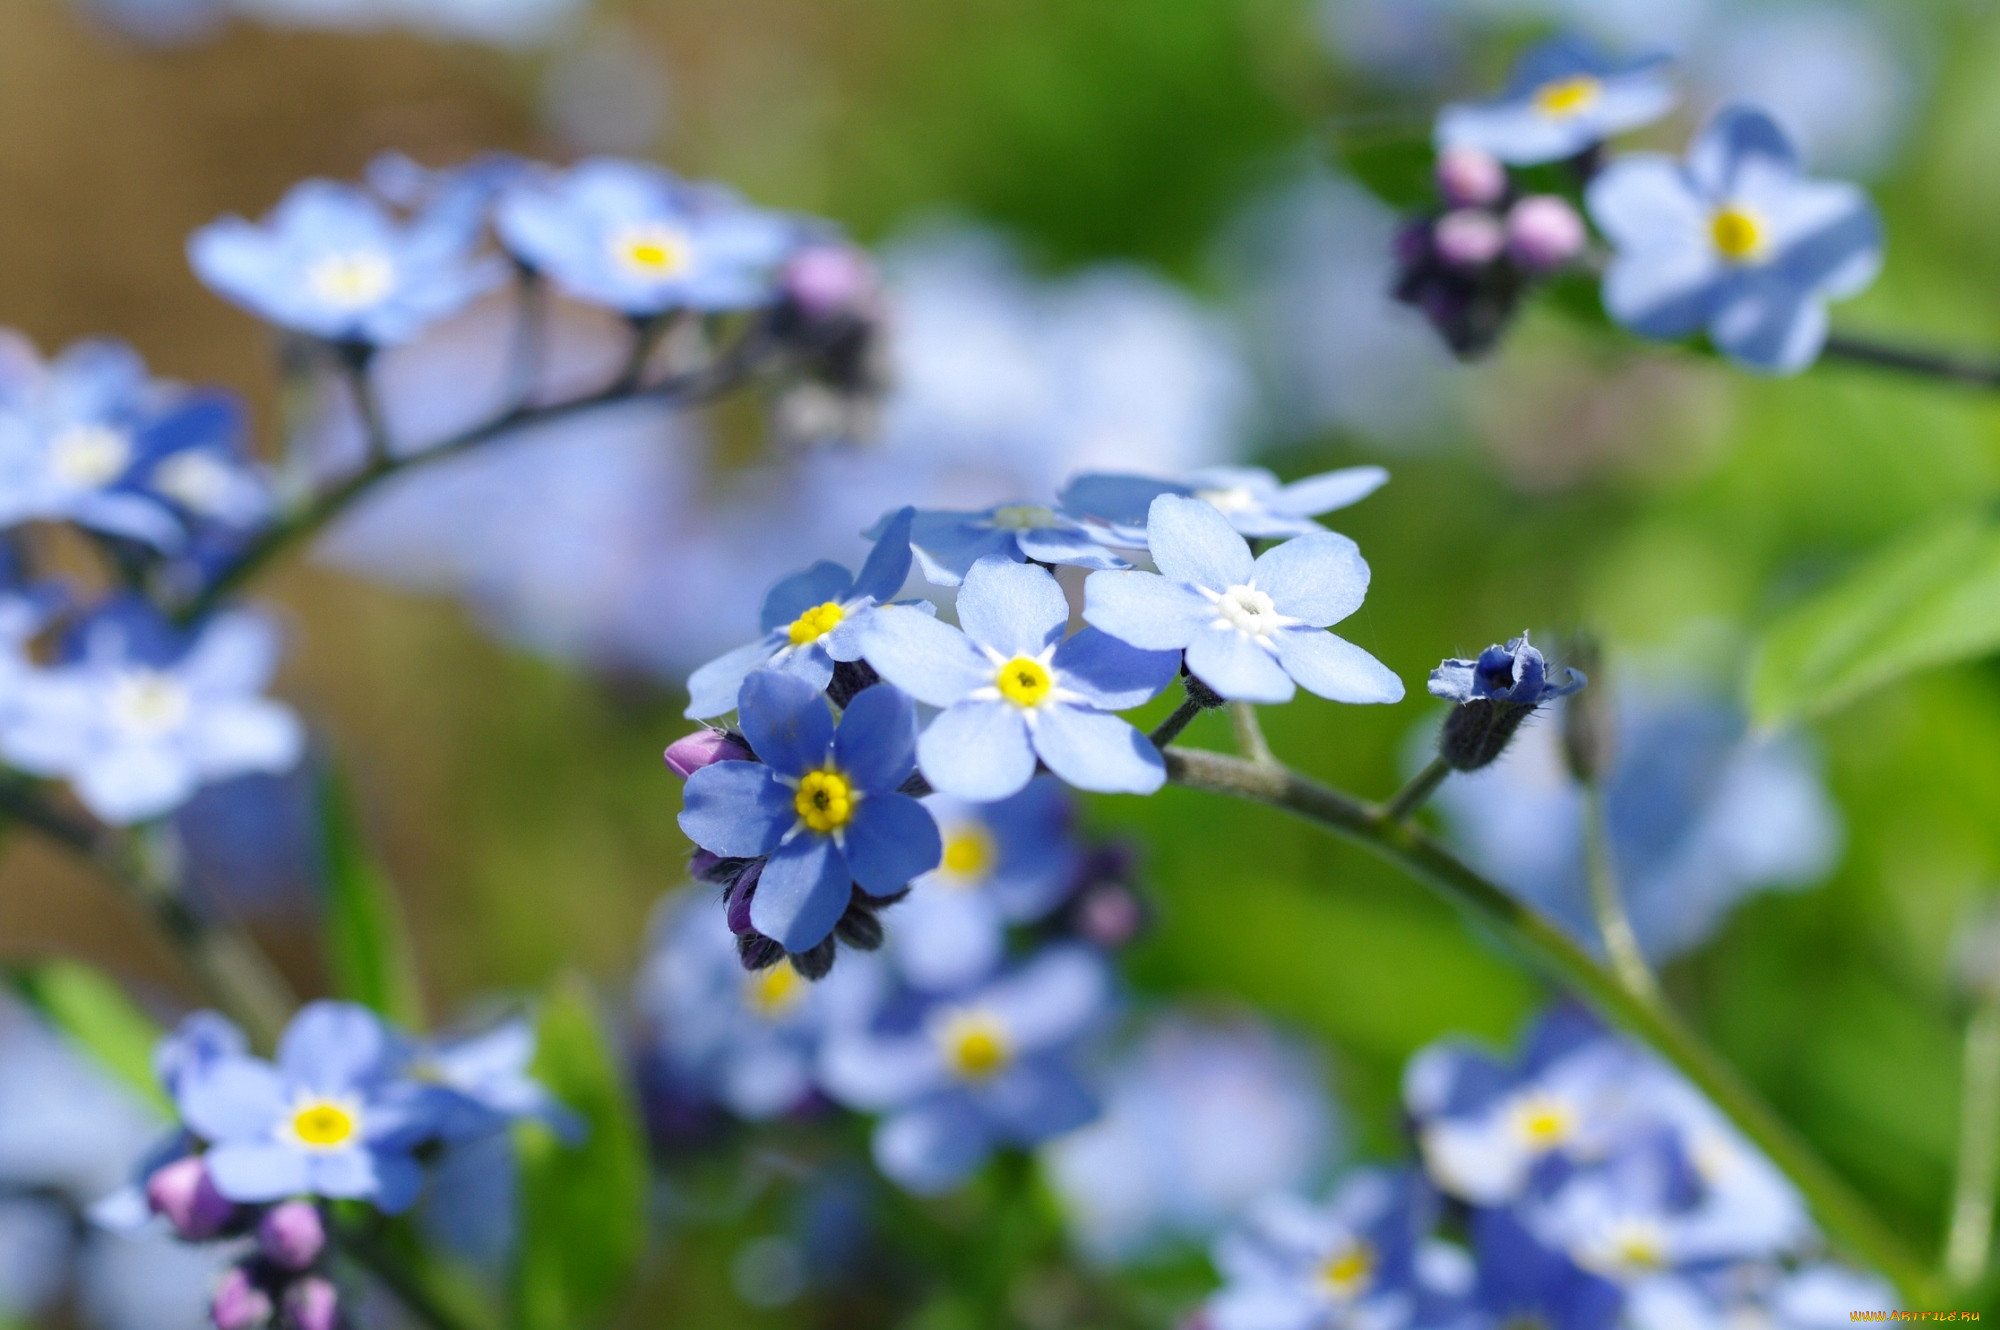 Глаза незабудки. Цветы незабудки. Голубые цветы незабудки. Незабудки весной. Весенние цветы незабудки.